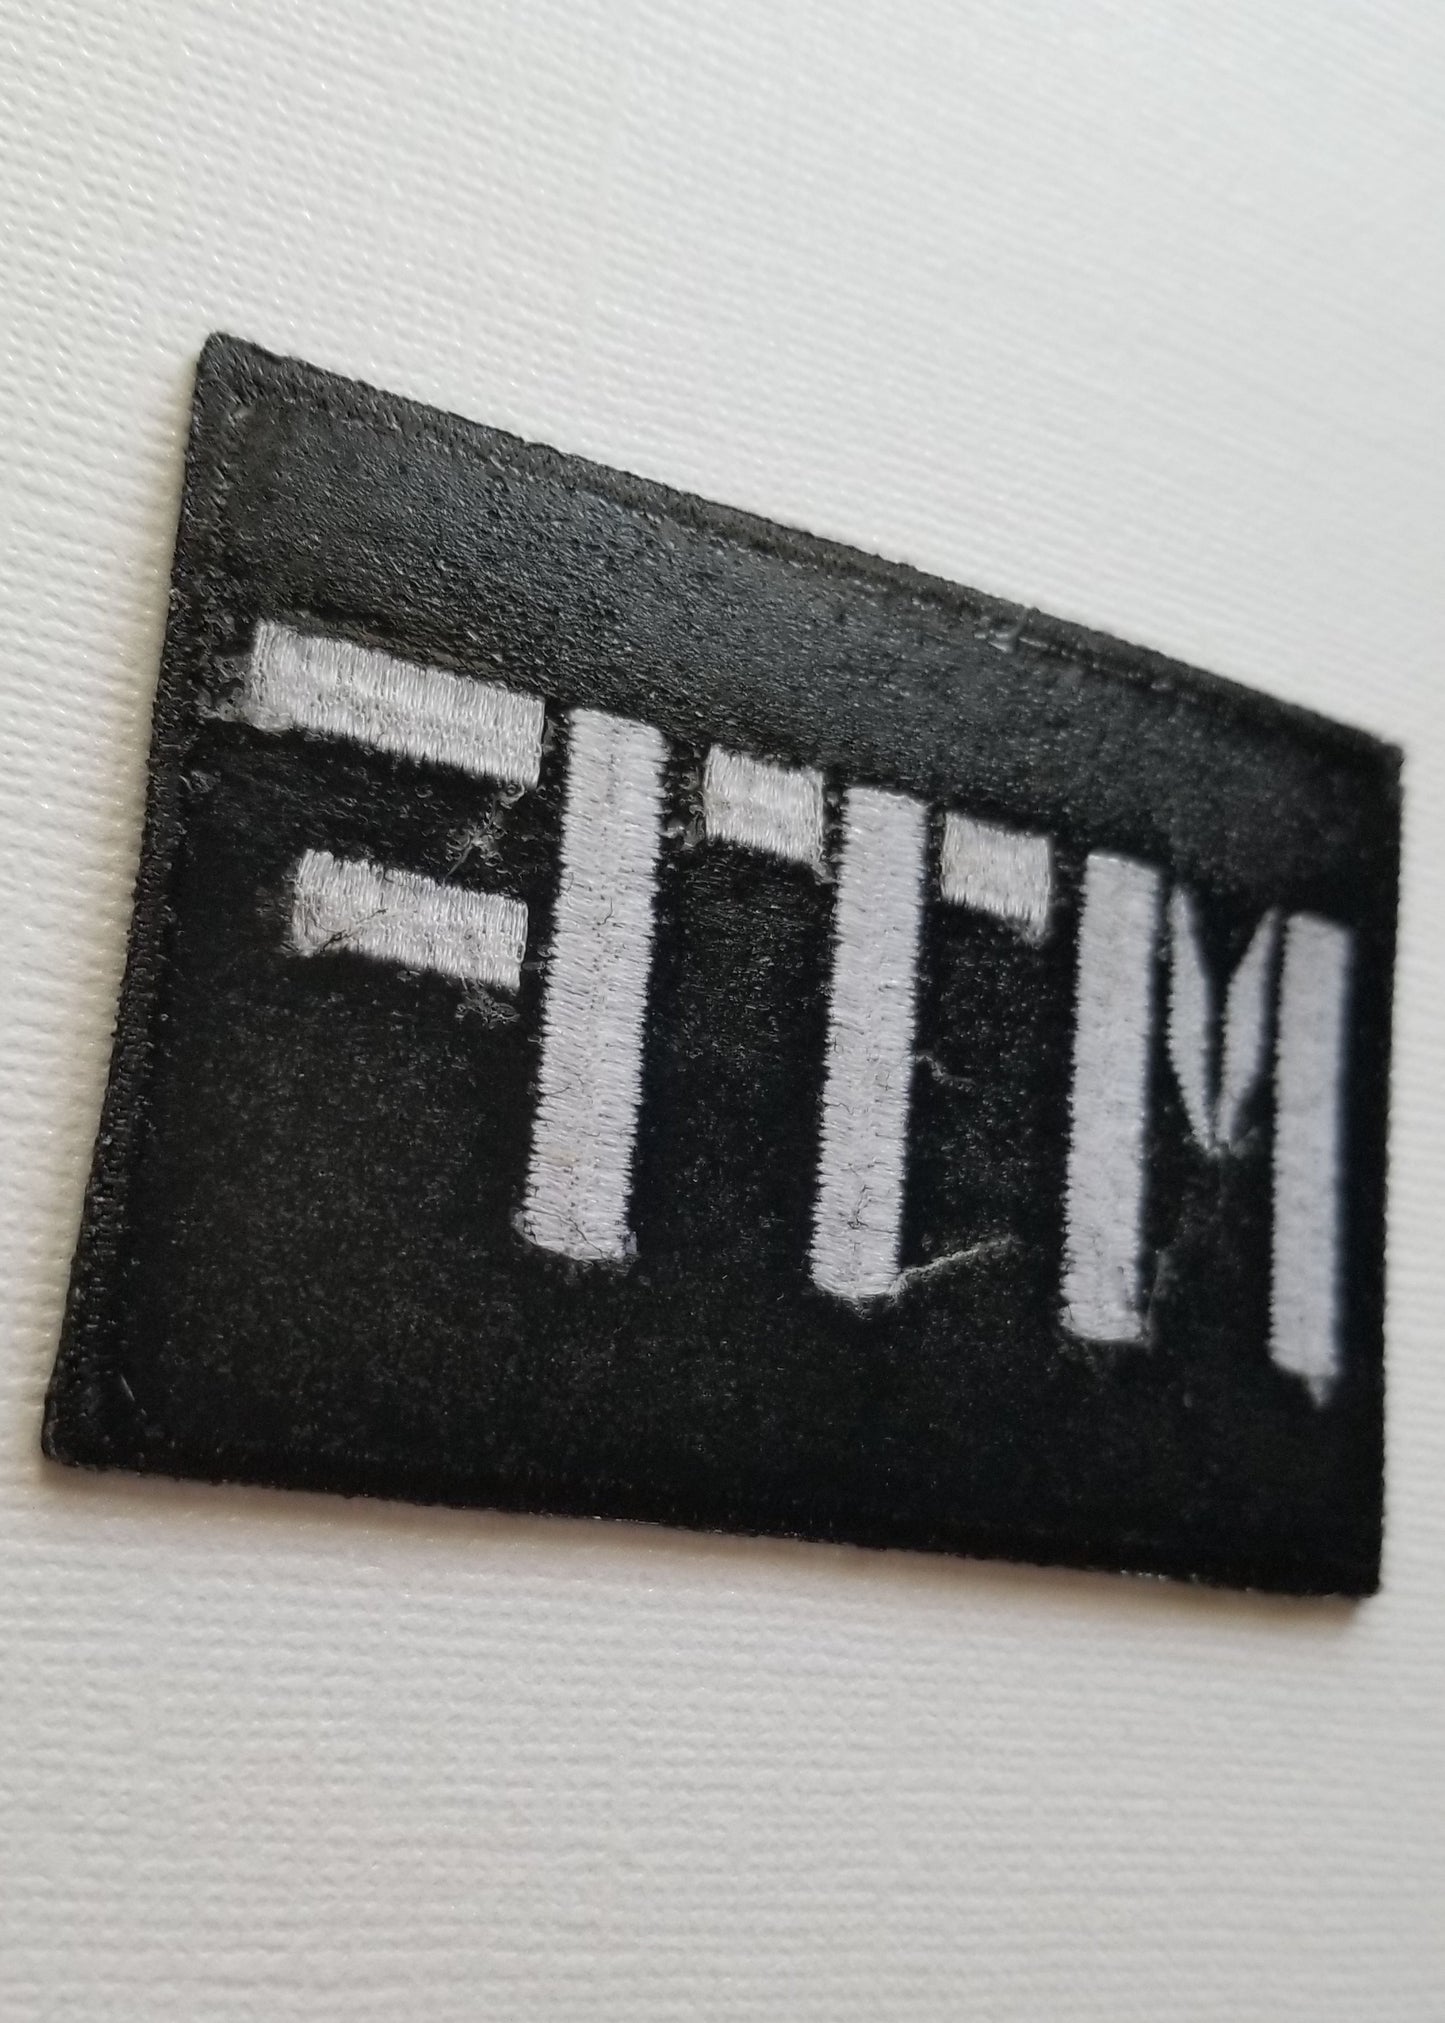 MTF Stencil Iron-on Text Black Patch